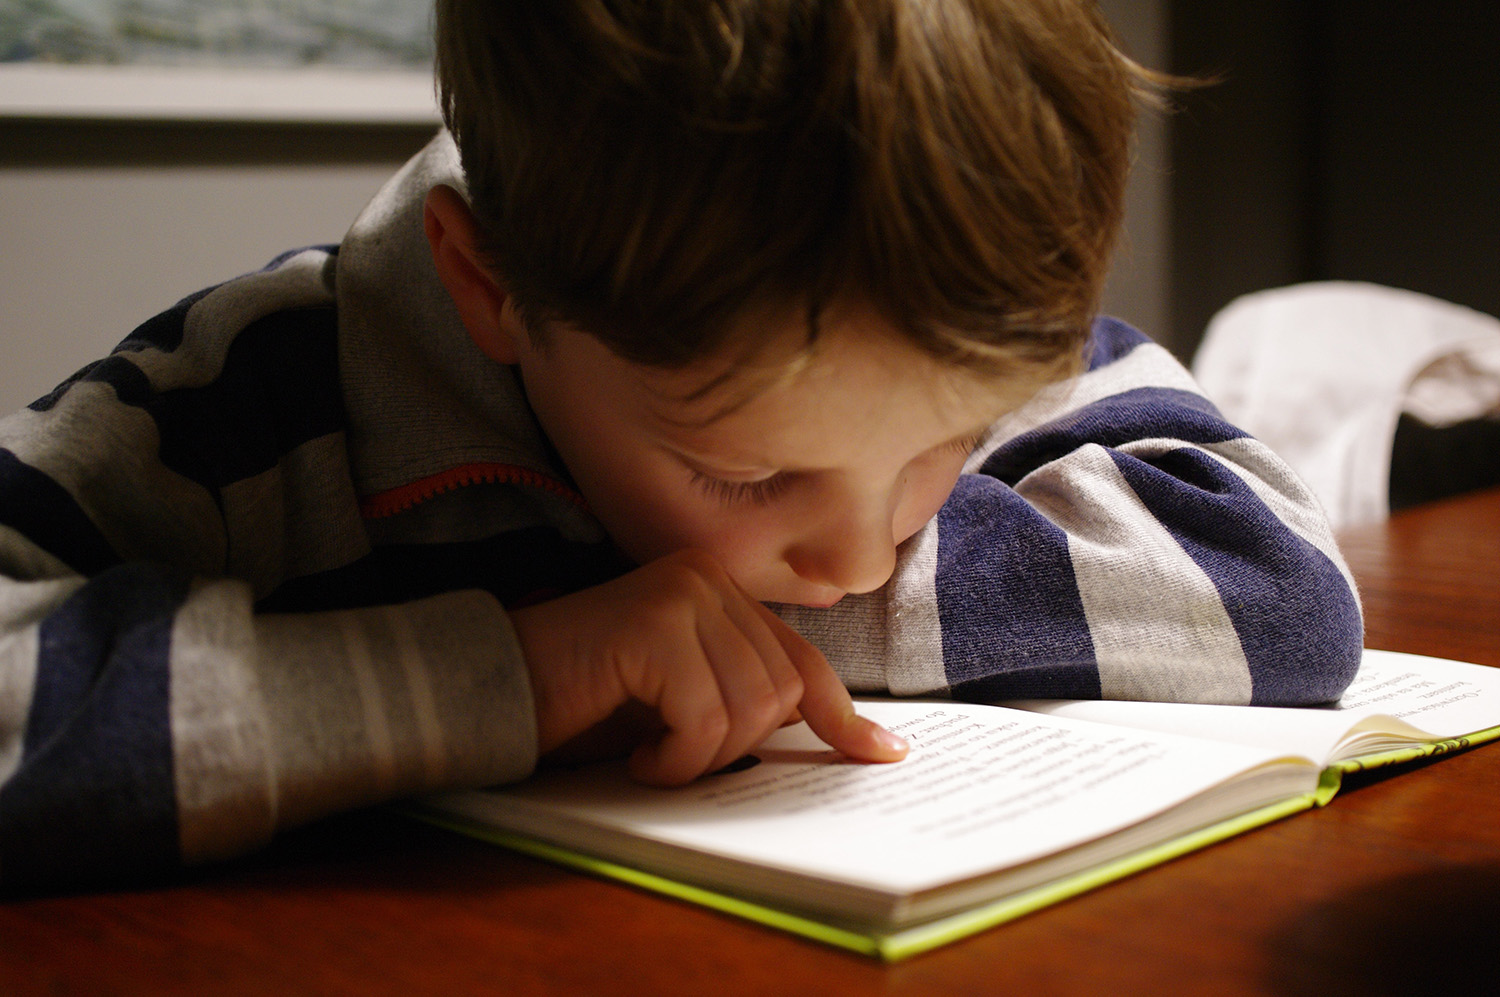 Little boy focusing hard on reading